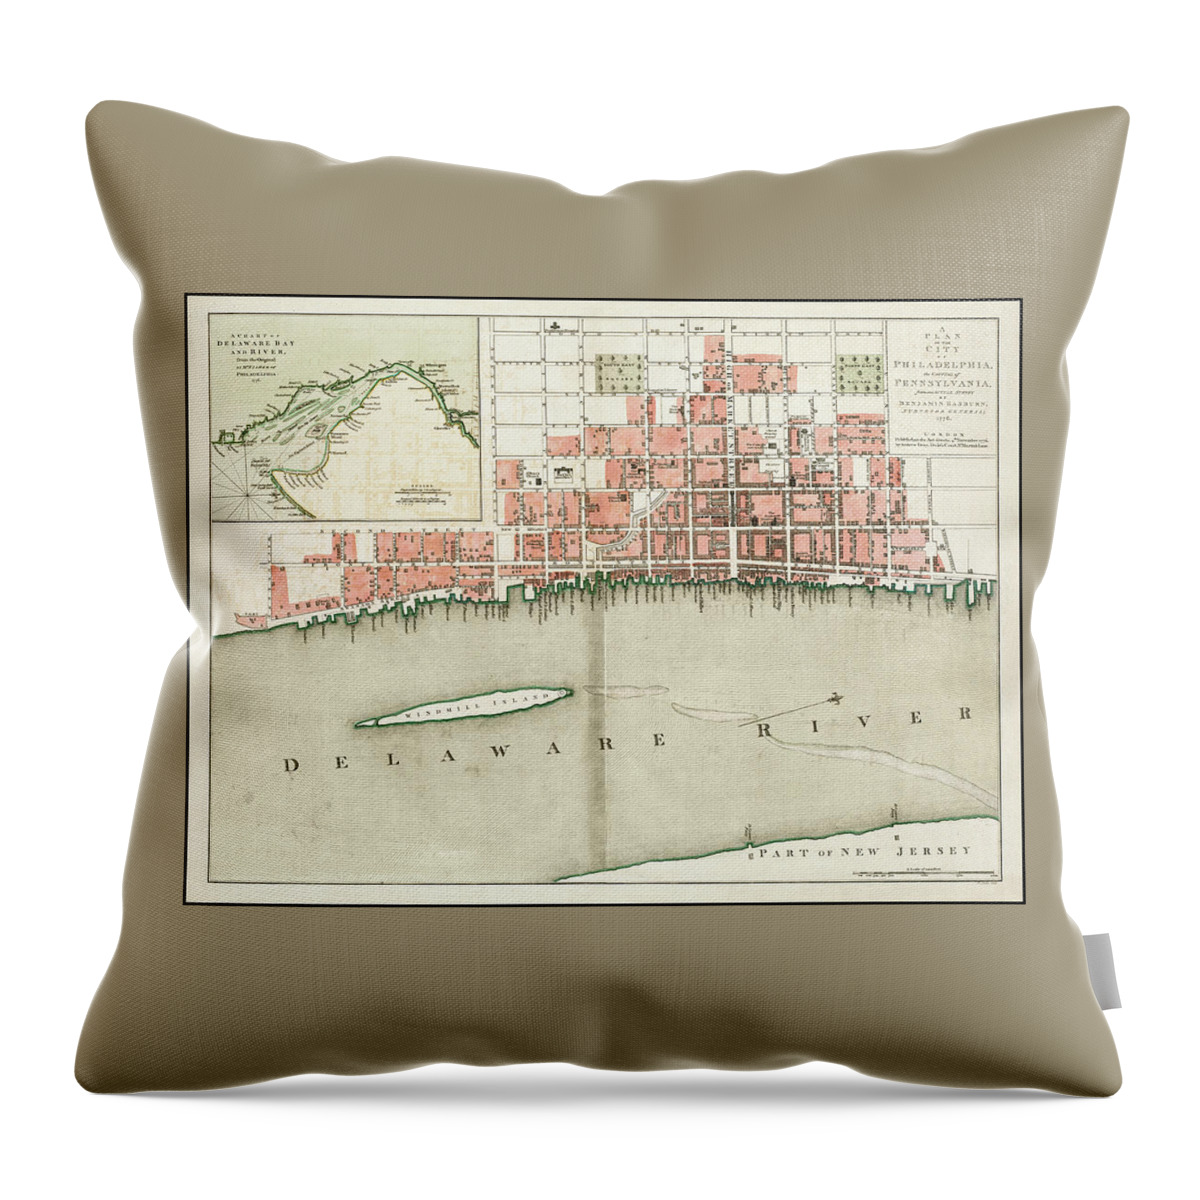 Philadelphia Throw Pillow featuring the photograph Philadelphia Pennsylvania Vintage City Map 1776 by Carol Japp